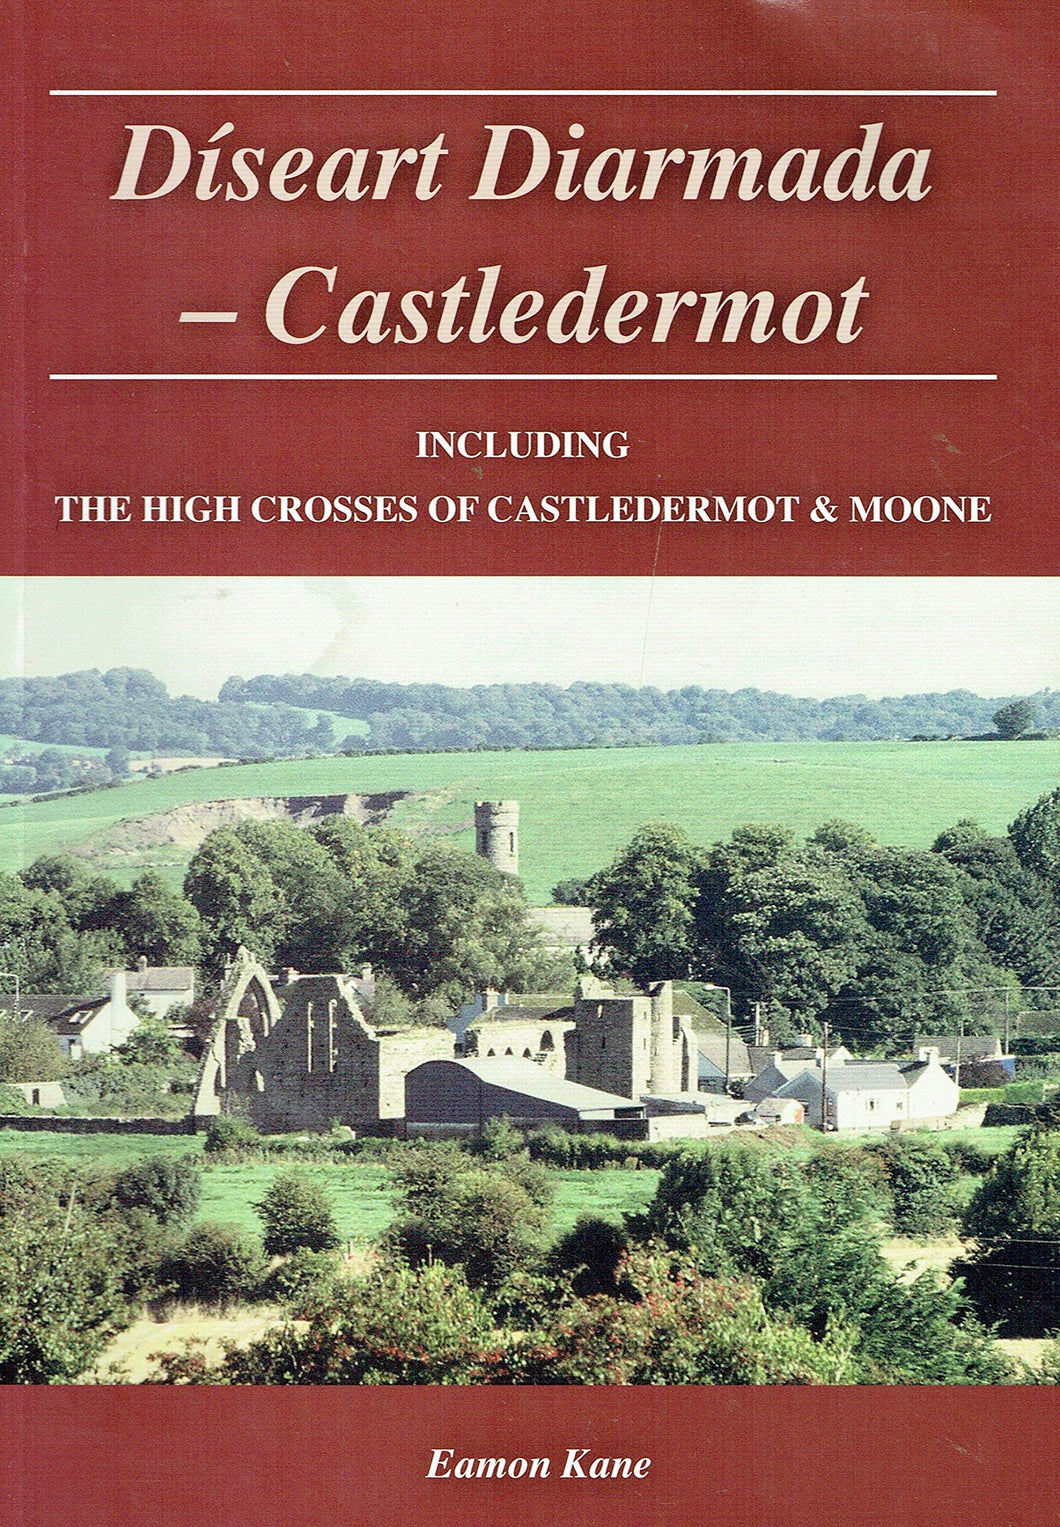 Díseart Diarmada - Castledermot - Including The High Crosses of Castledermot and Moone